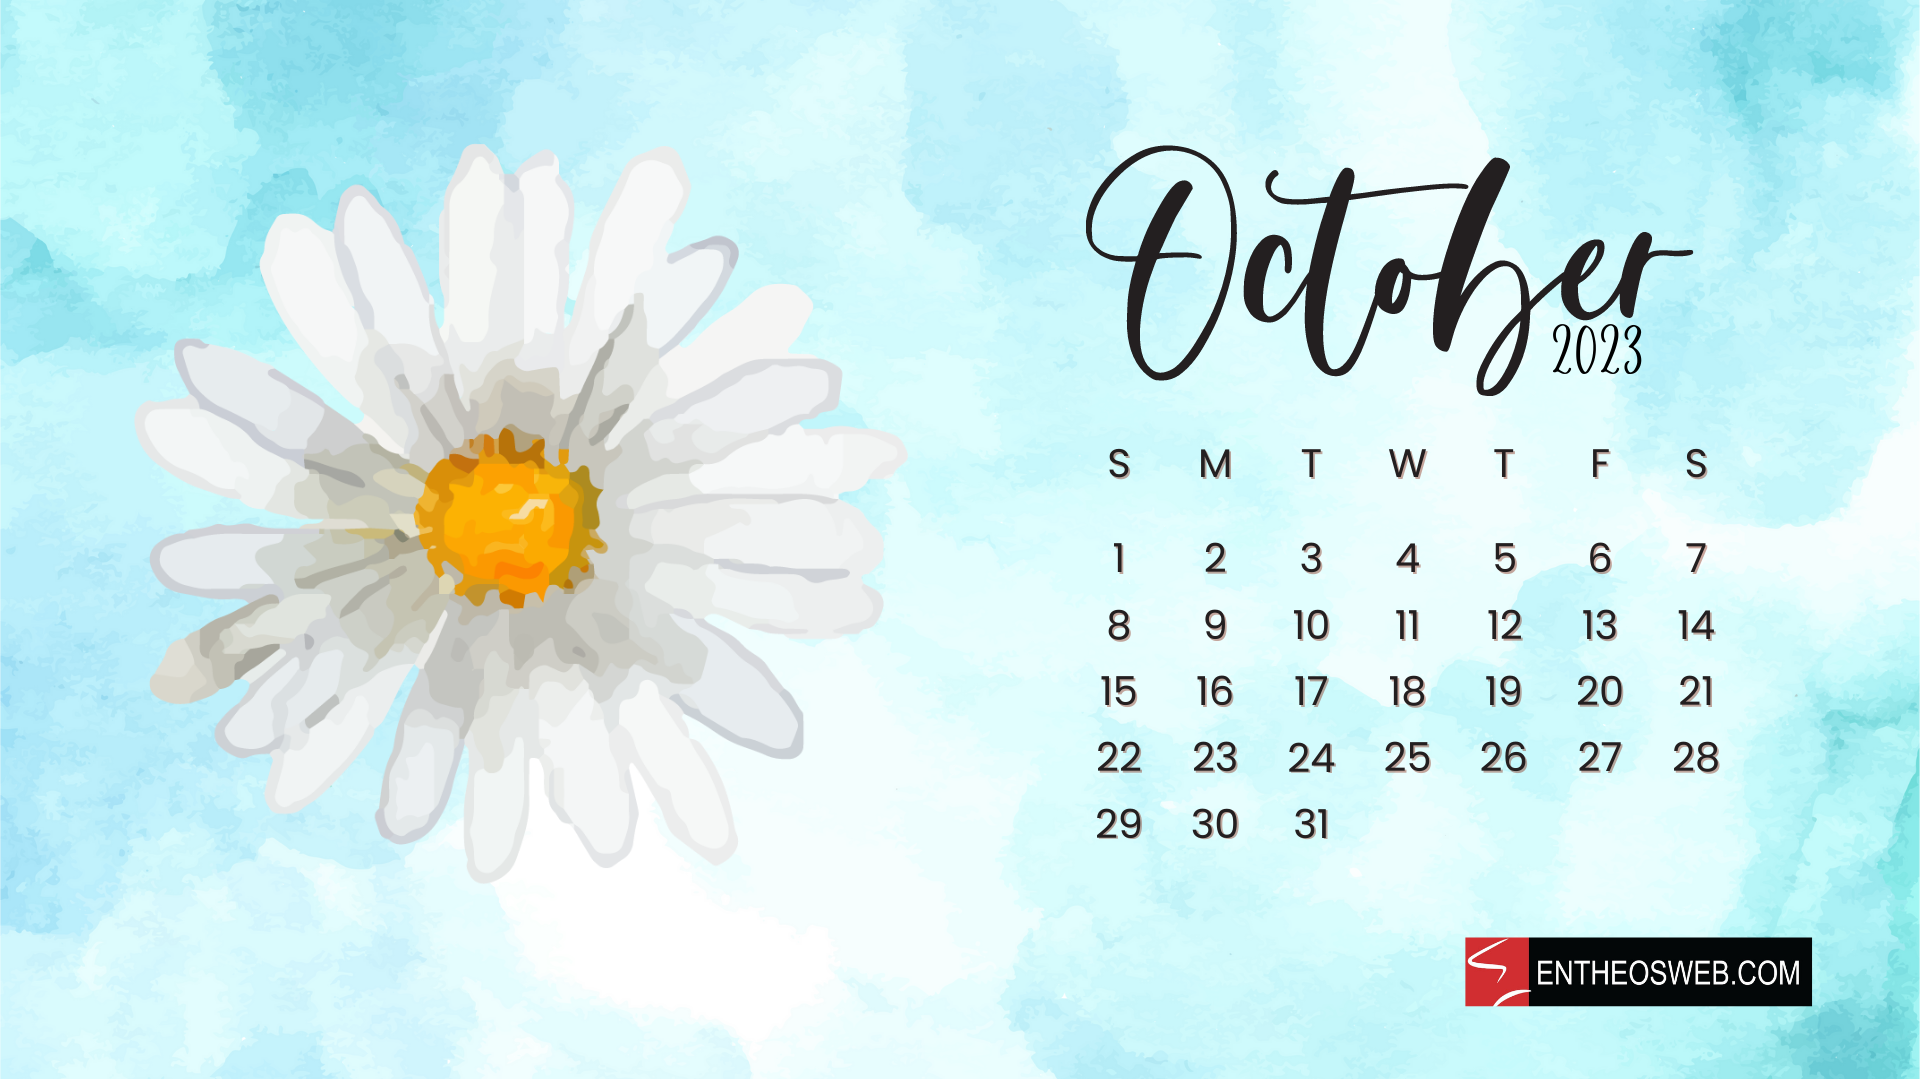 October Calendar Desktop Wallpaper Entheosweb